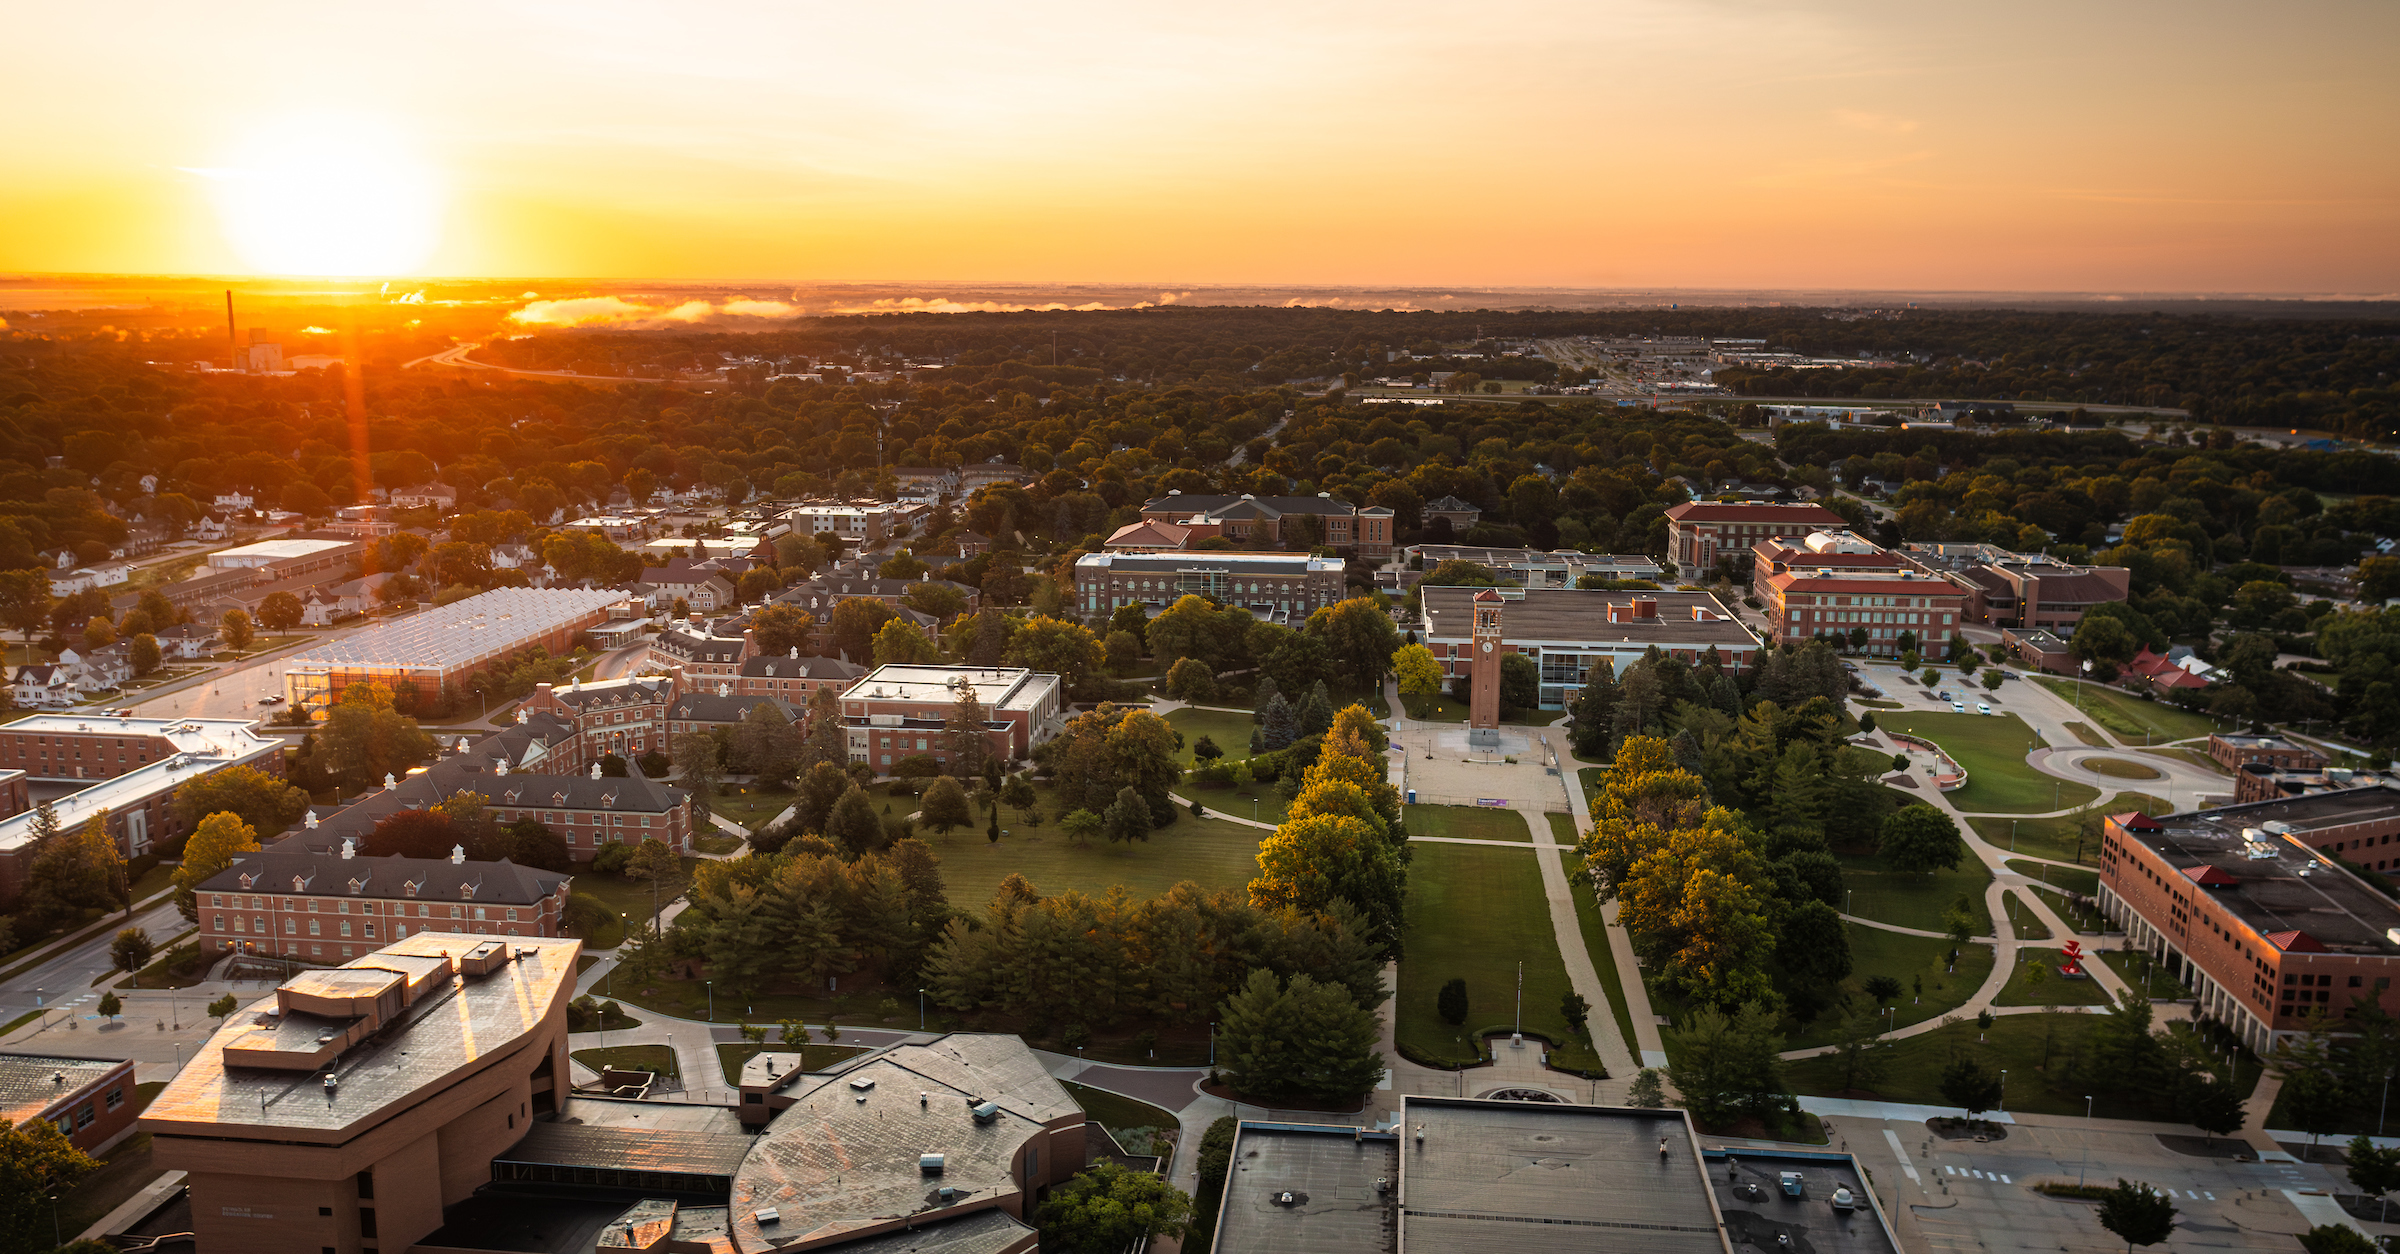 campus shot looking at sunrise